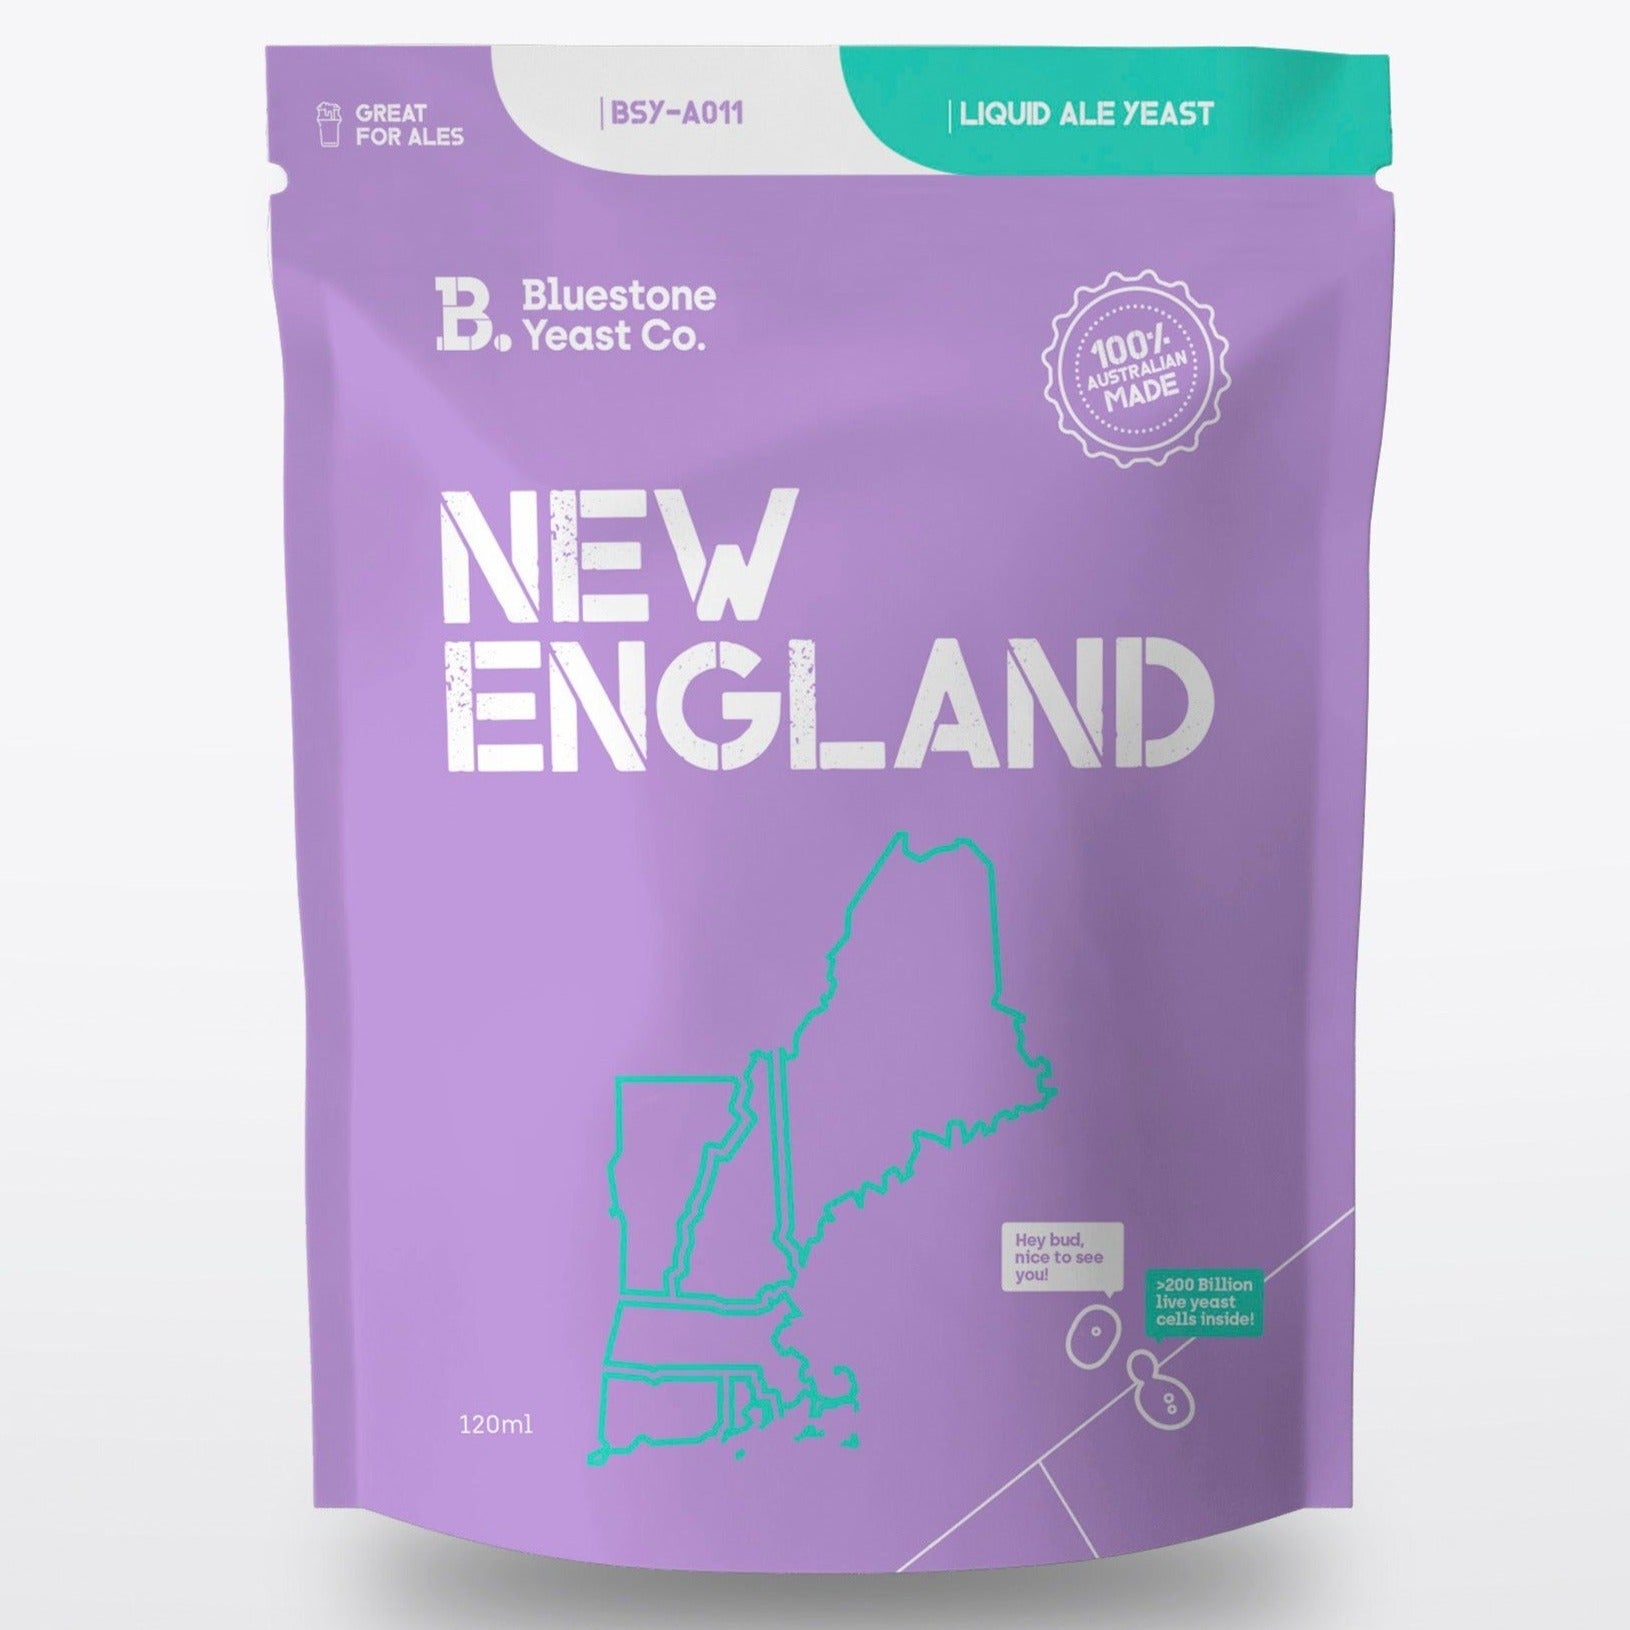 BSY-A011 New England Bluestone Yeast